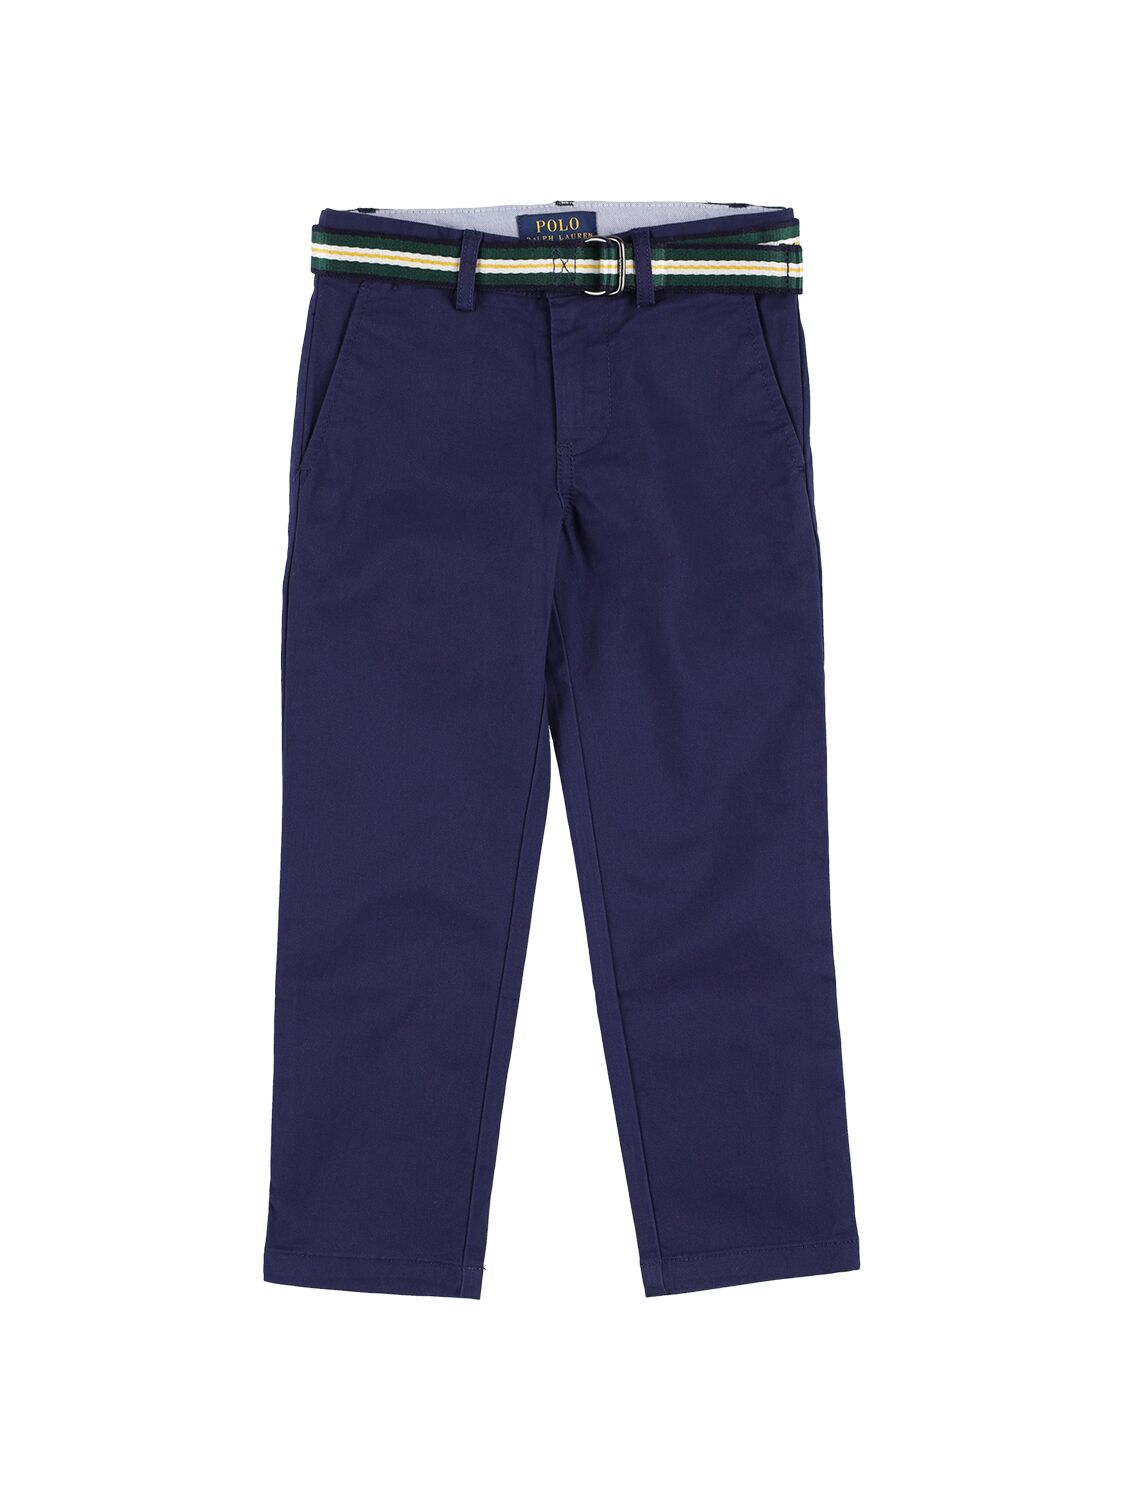 Ralph Lauren Kids' Stretch Cotton Twill Chino Pants W/ Belt